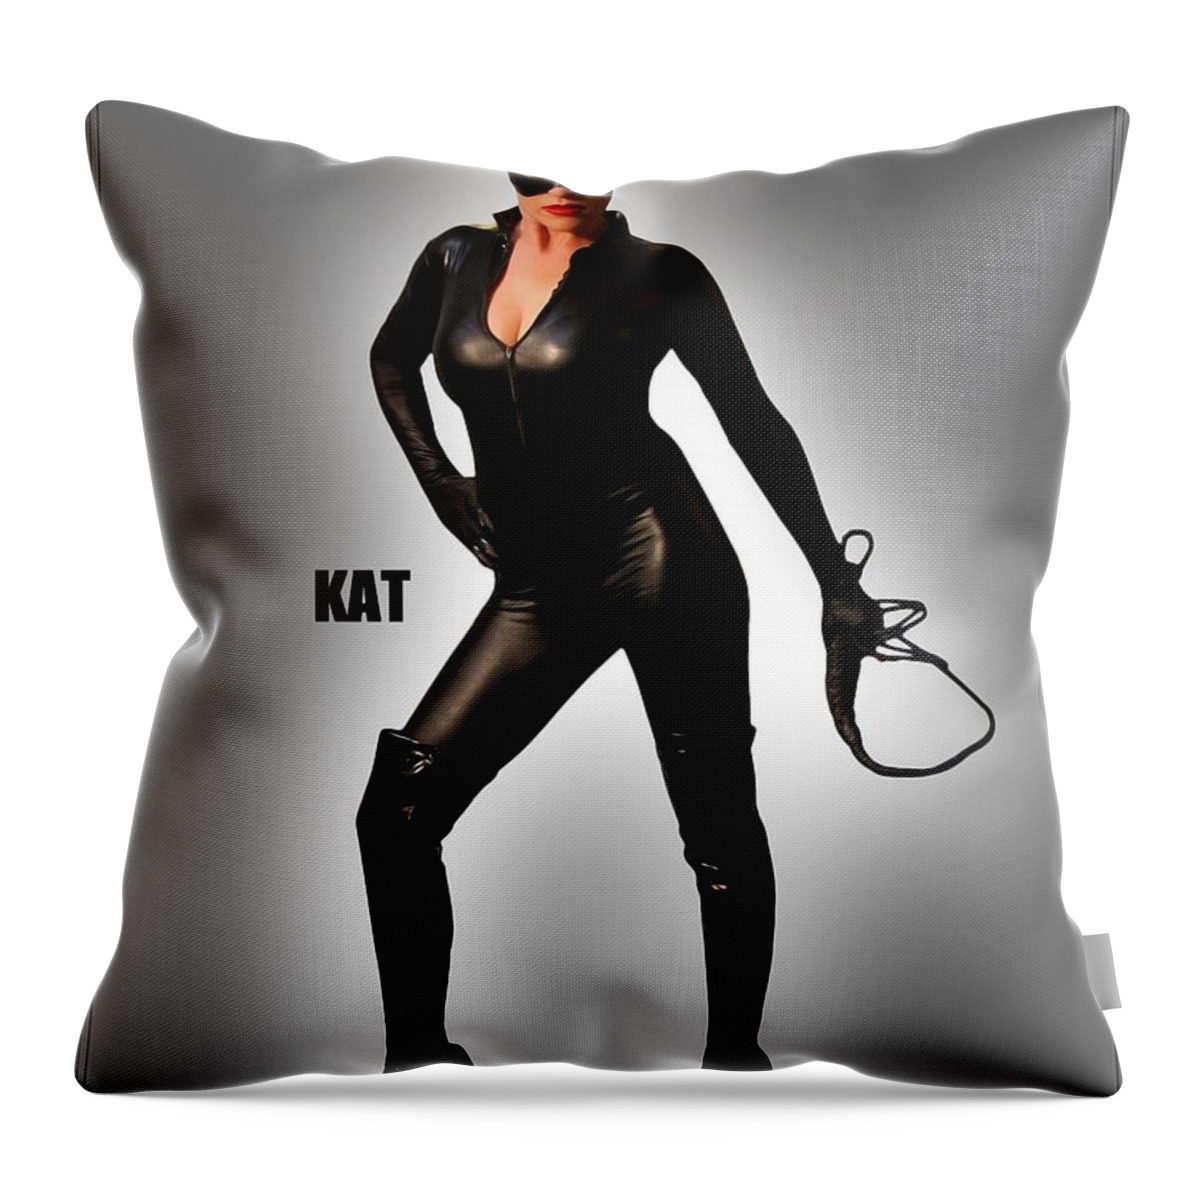 Cat Throw Pillow featuring the photograph Kat Vgirl PinUp by Jon Volden